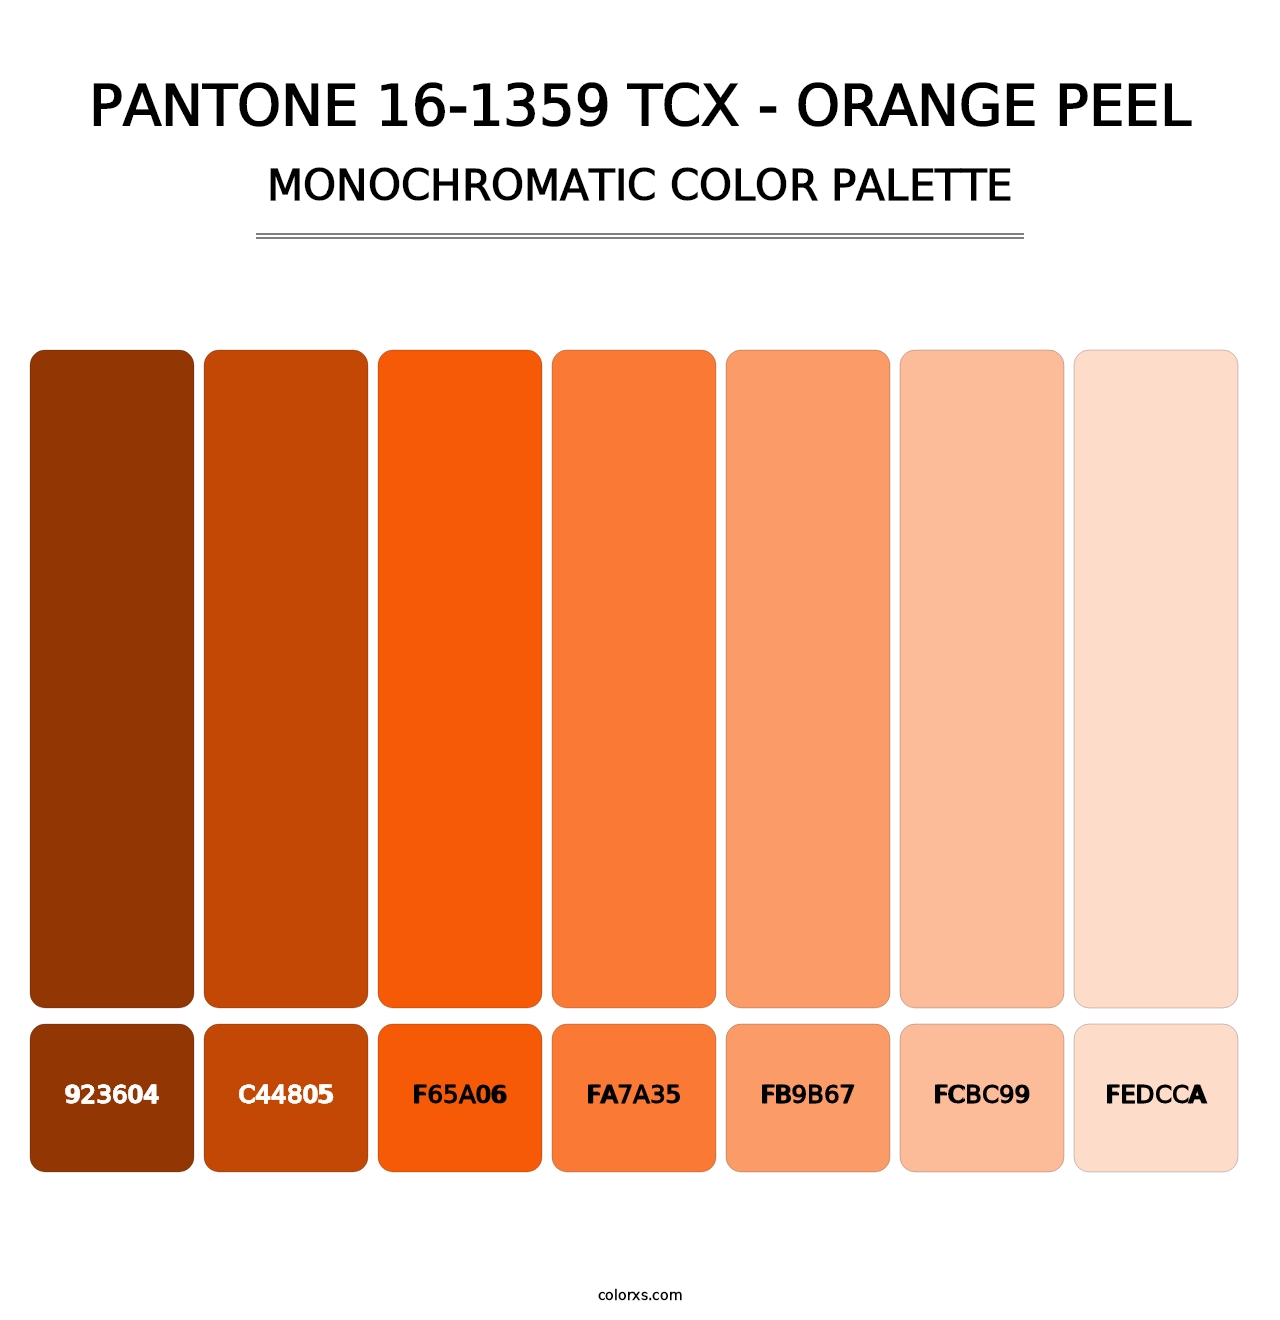 PANTONE 16-1359 TCX - Orange Peel - Monochromatic Color Palette